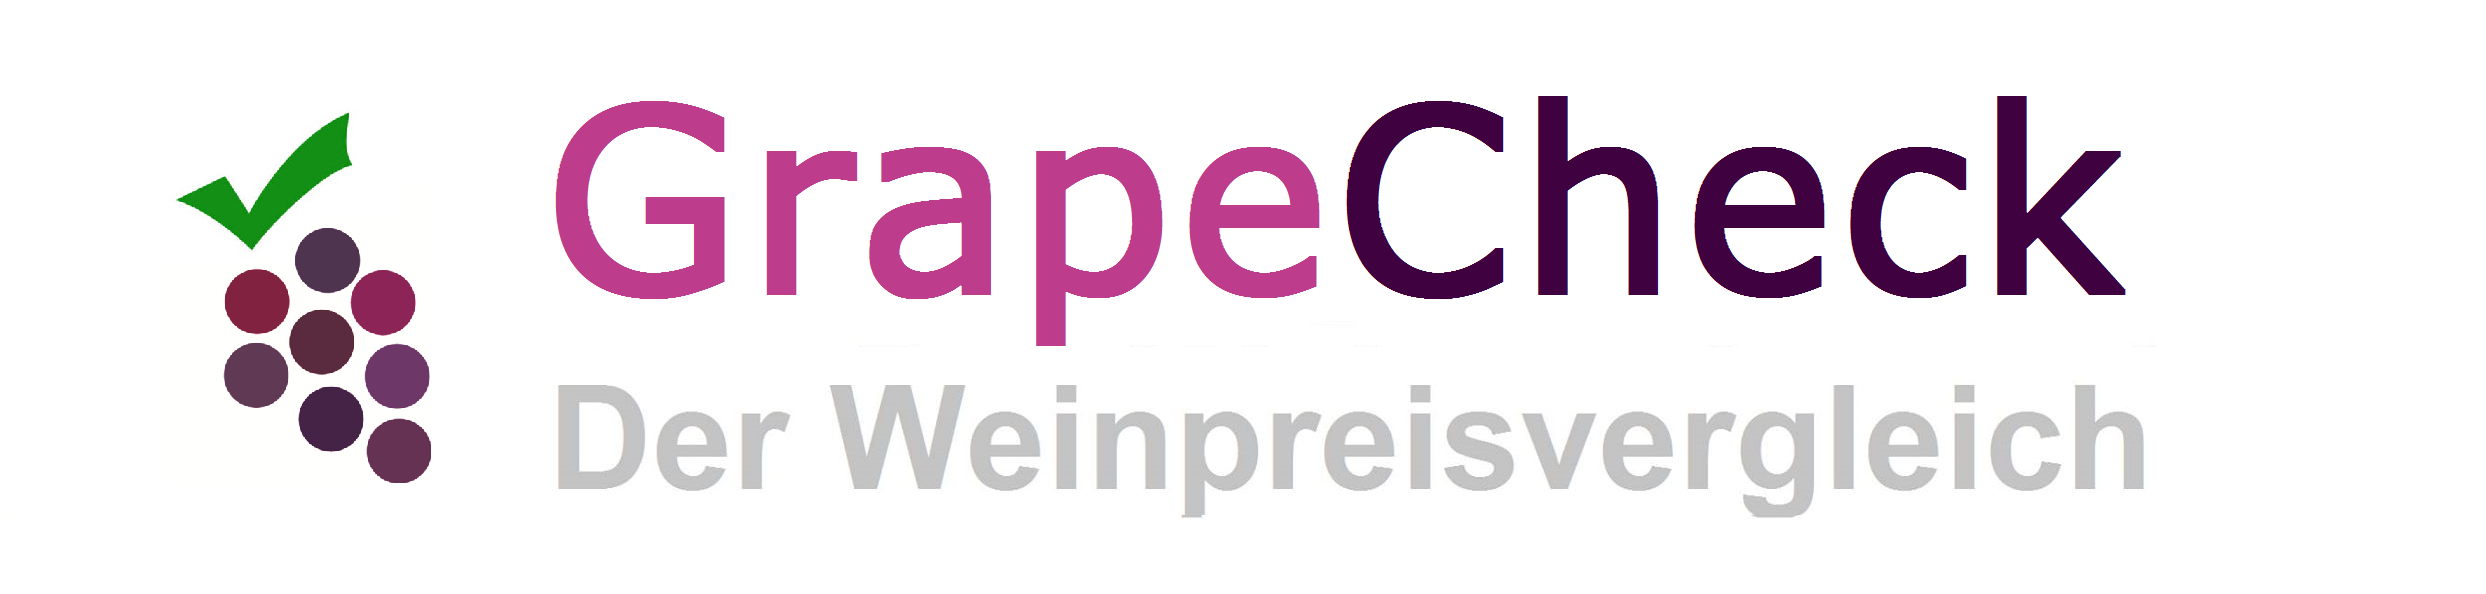 GrapeCheck GmbH